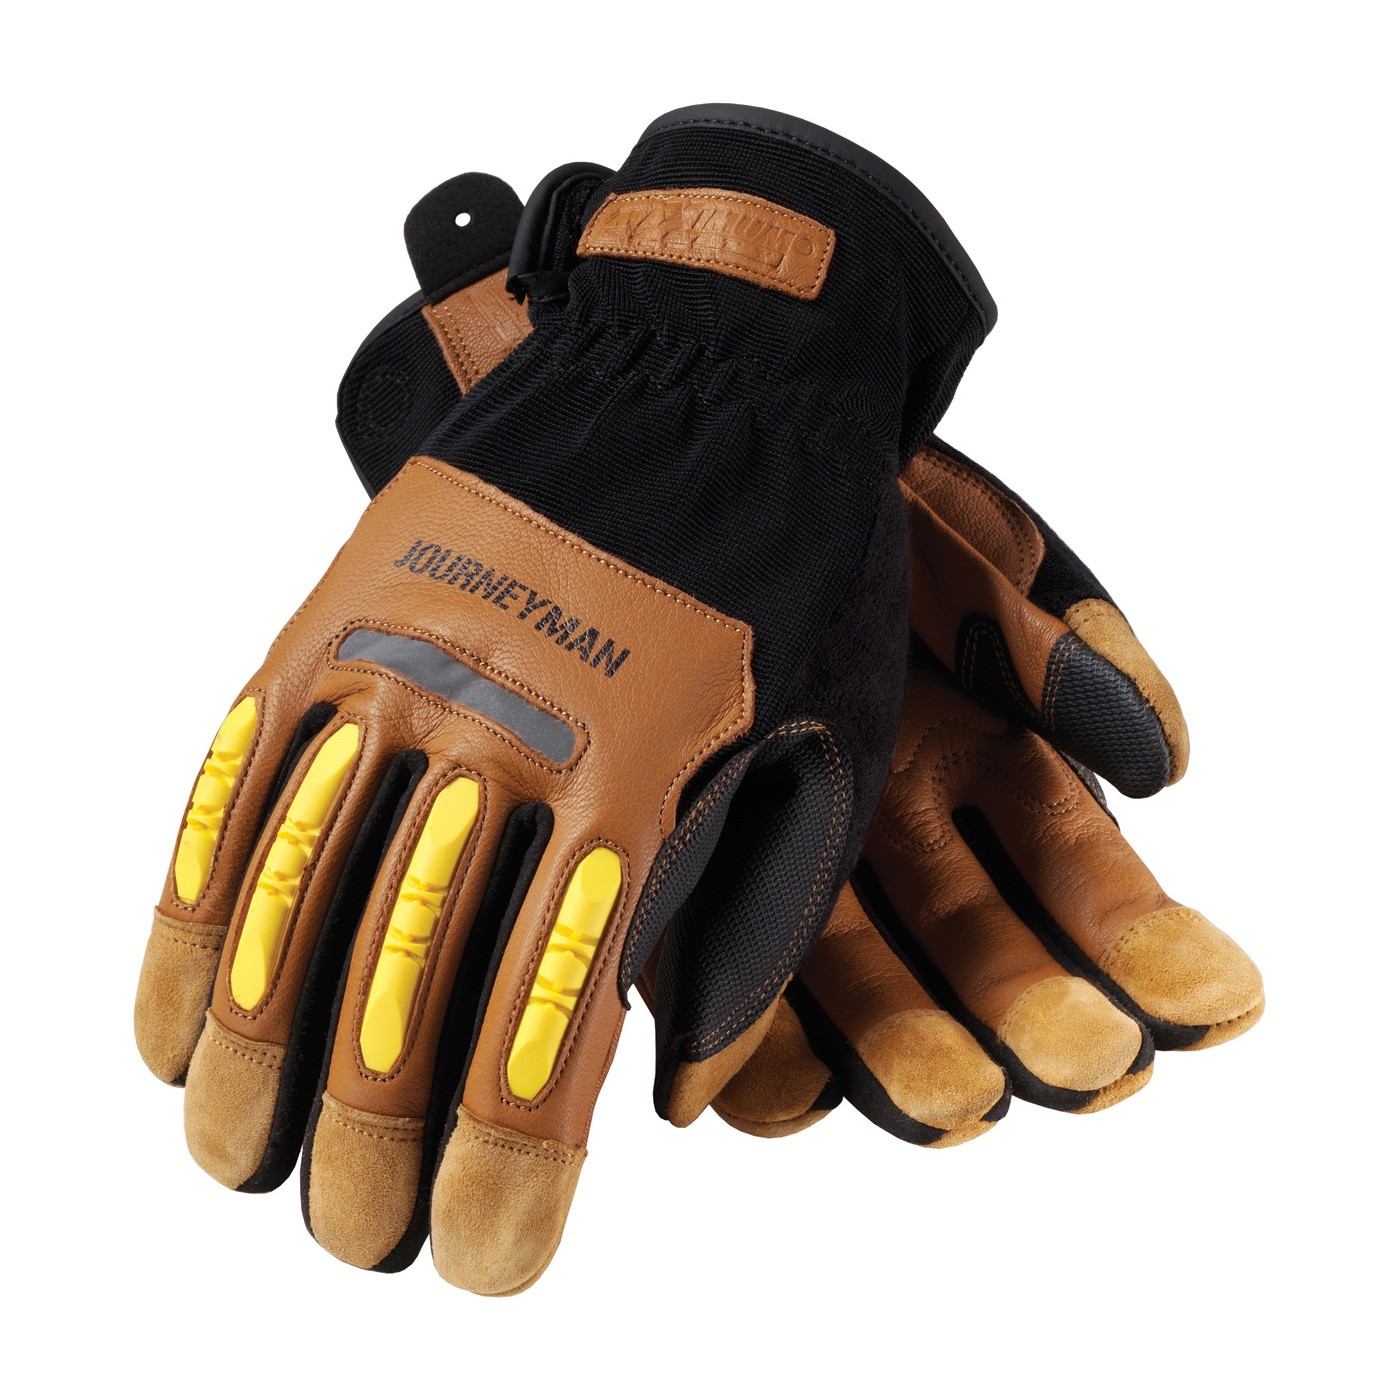 JOURNEYMAN, Reinforced Goatskin Leather Palm, TPR on Fingers Size Medium